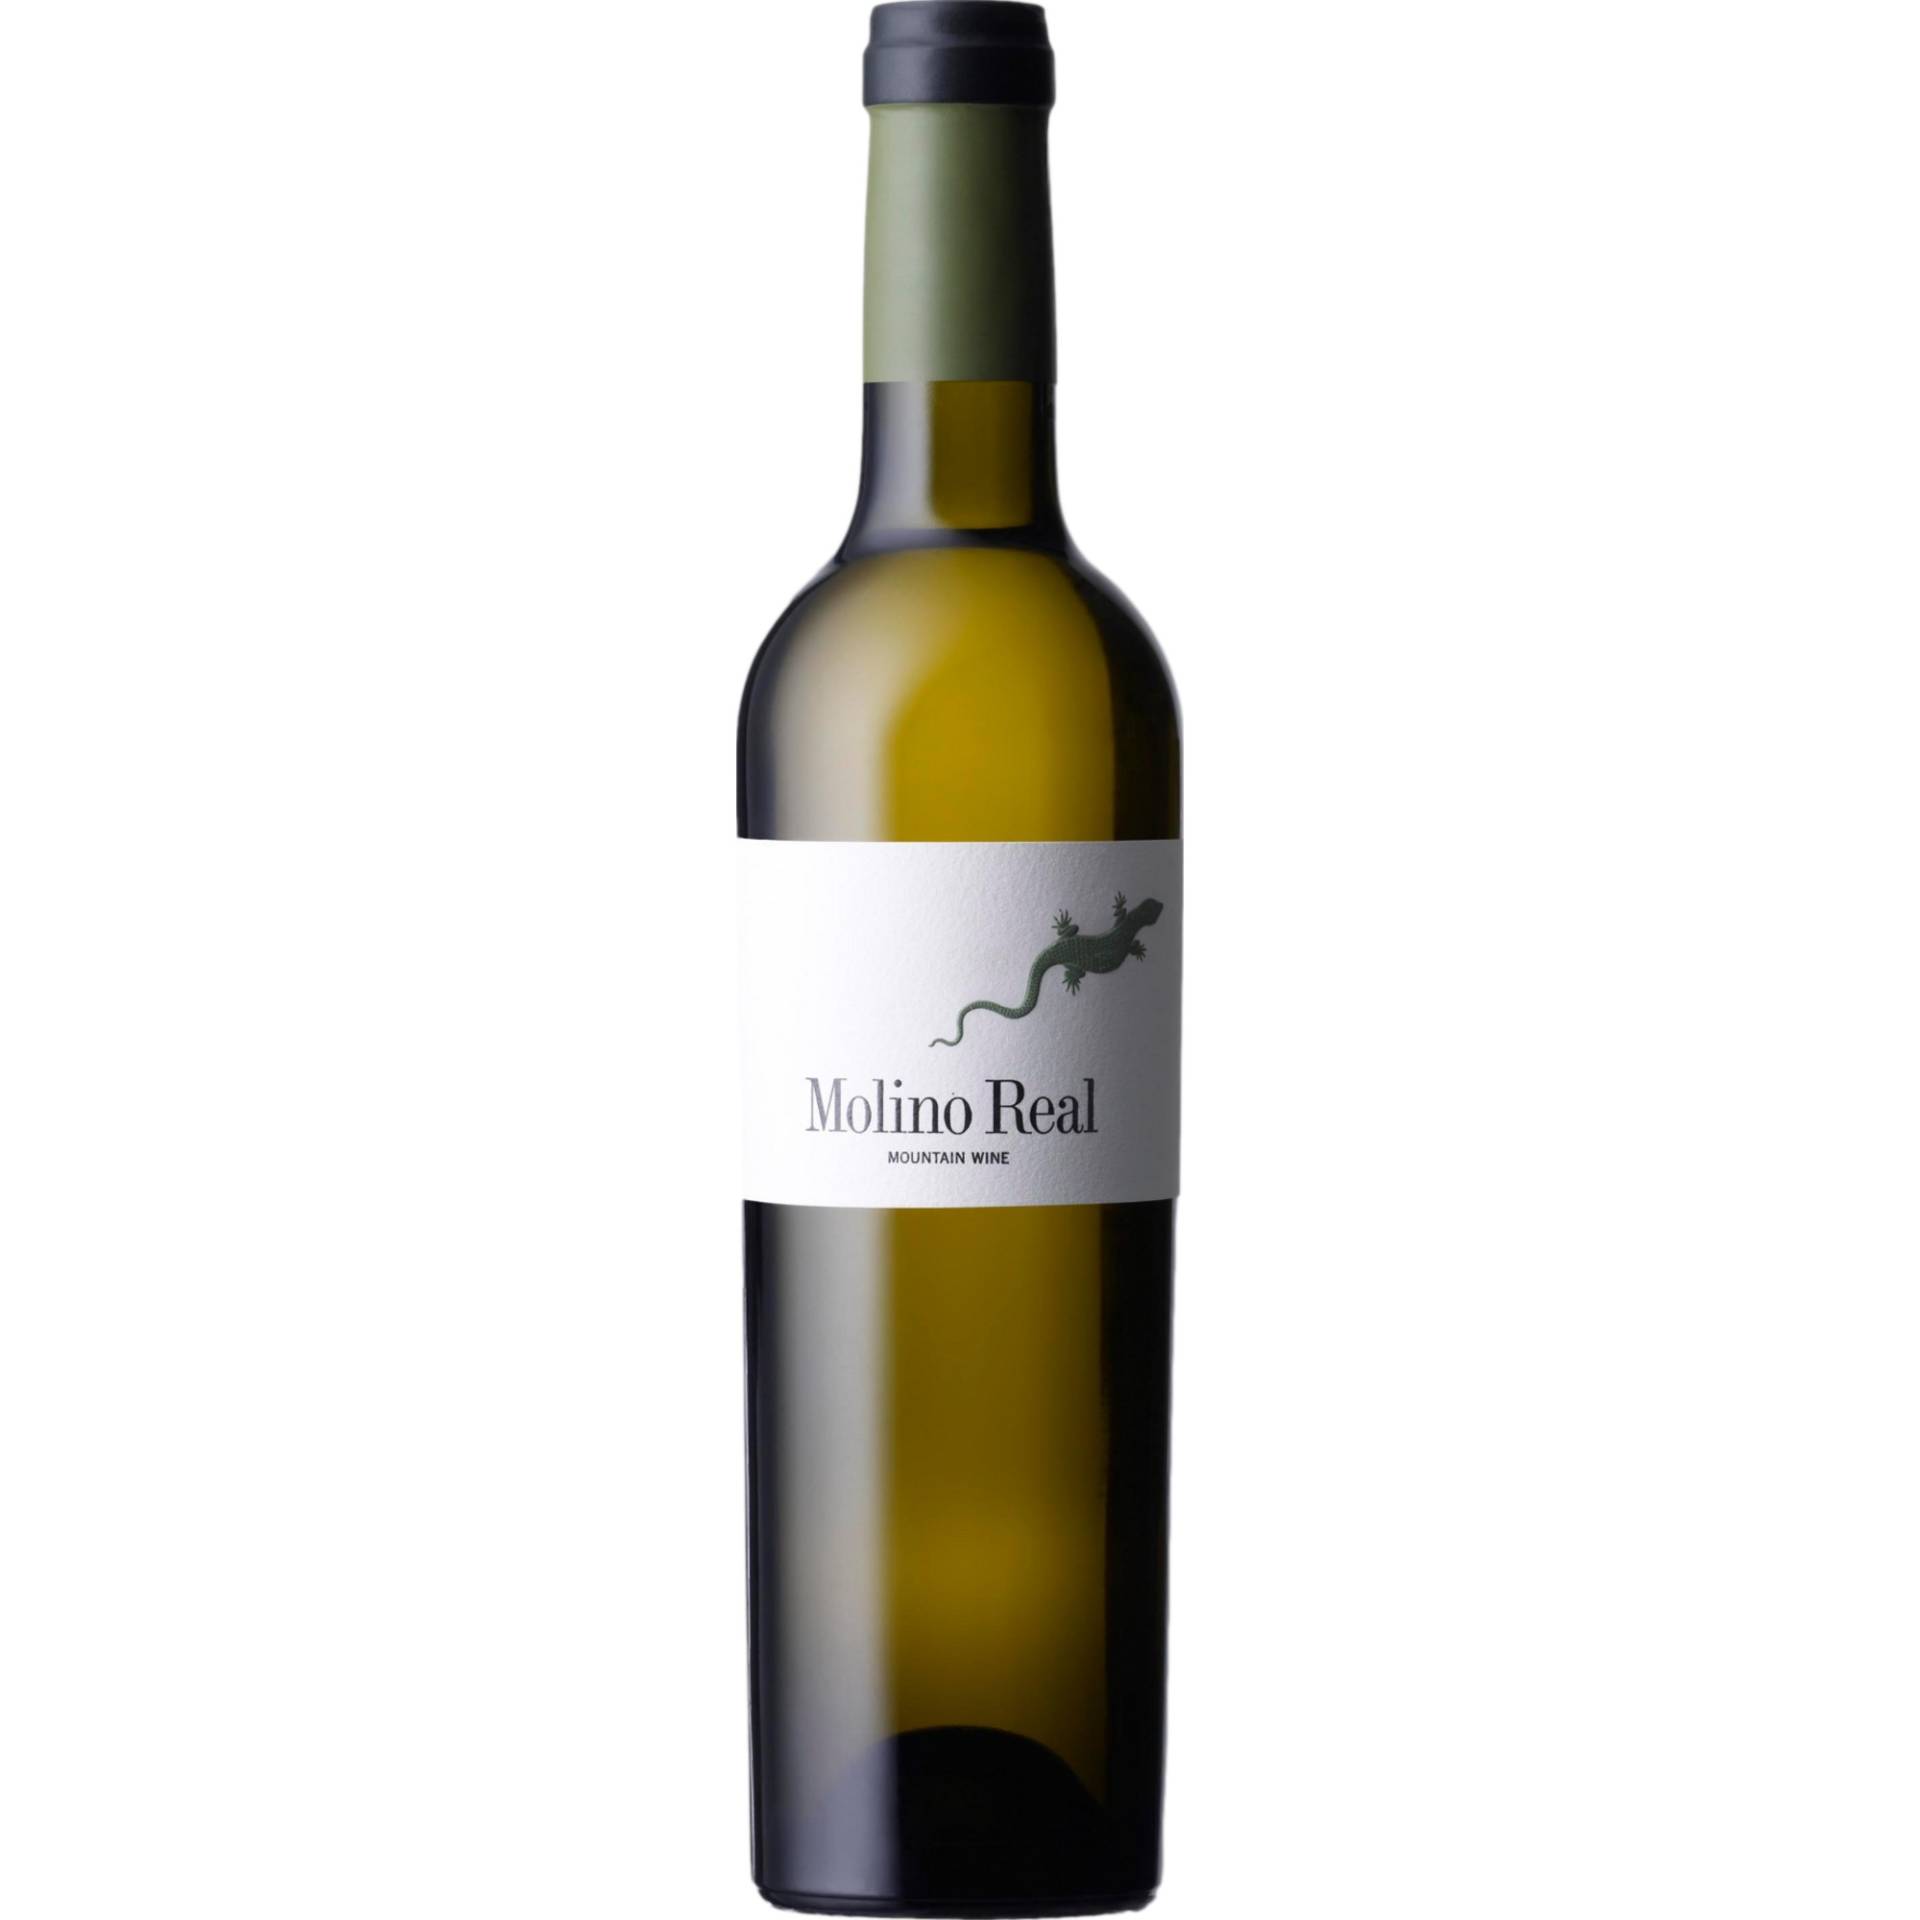 Molino Real - Mountain Wine Molino Real, Málaga DO, Andalusien, 2018, Weißwein von Telmo Rodriguez, El Monte, 01308 Lanciego, Álava